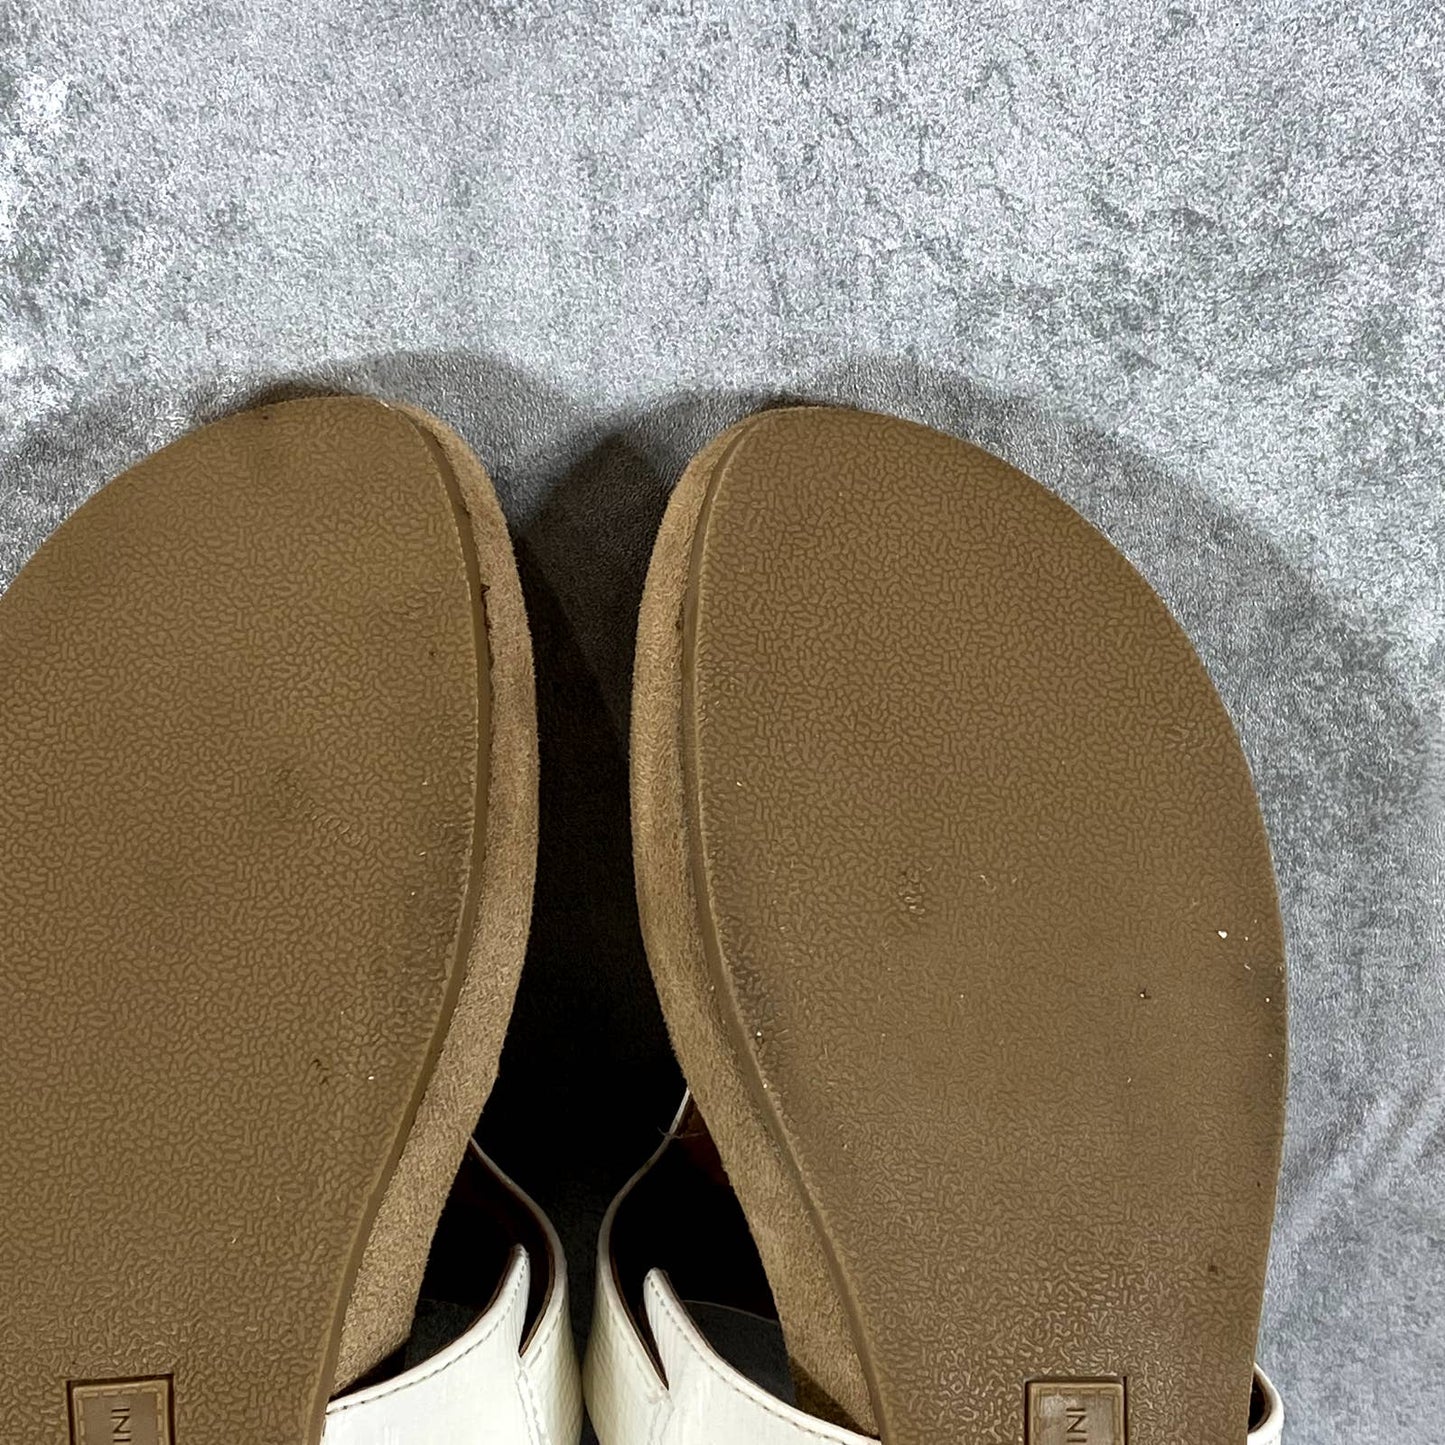 GIANI BERNINI Women's White Smooth Rivver Memory Foam Thong Sandals SZ 7.5